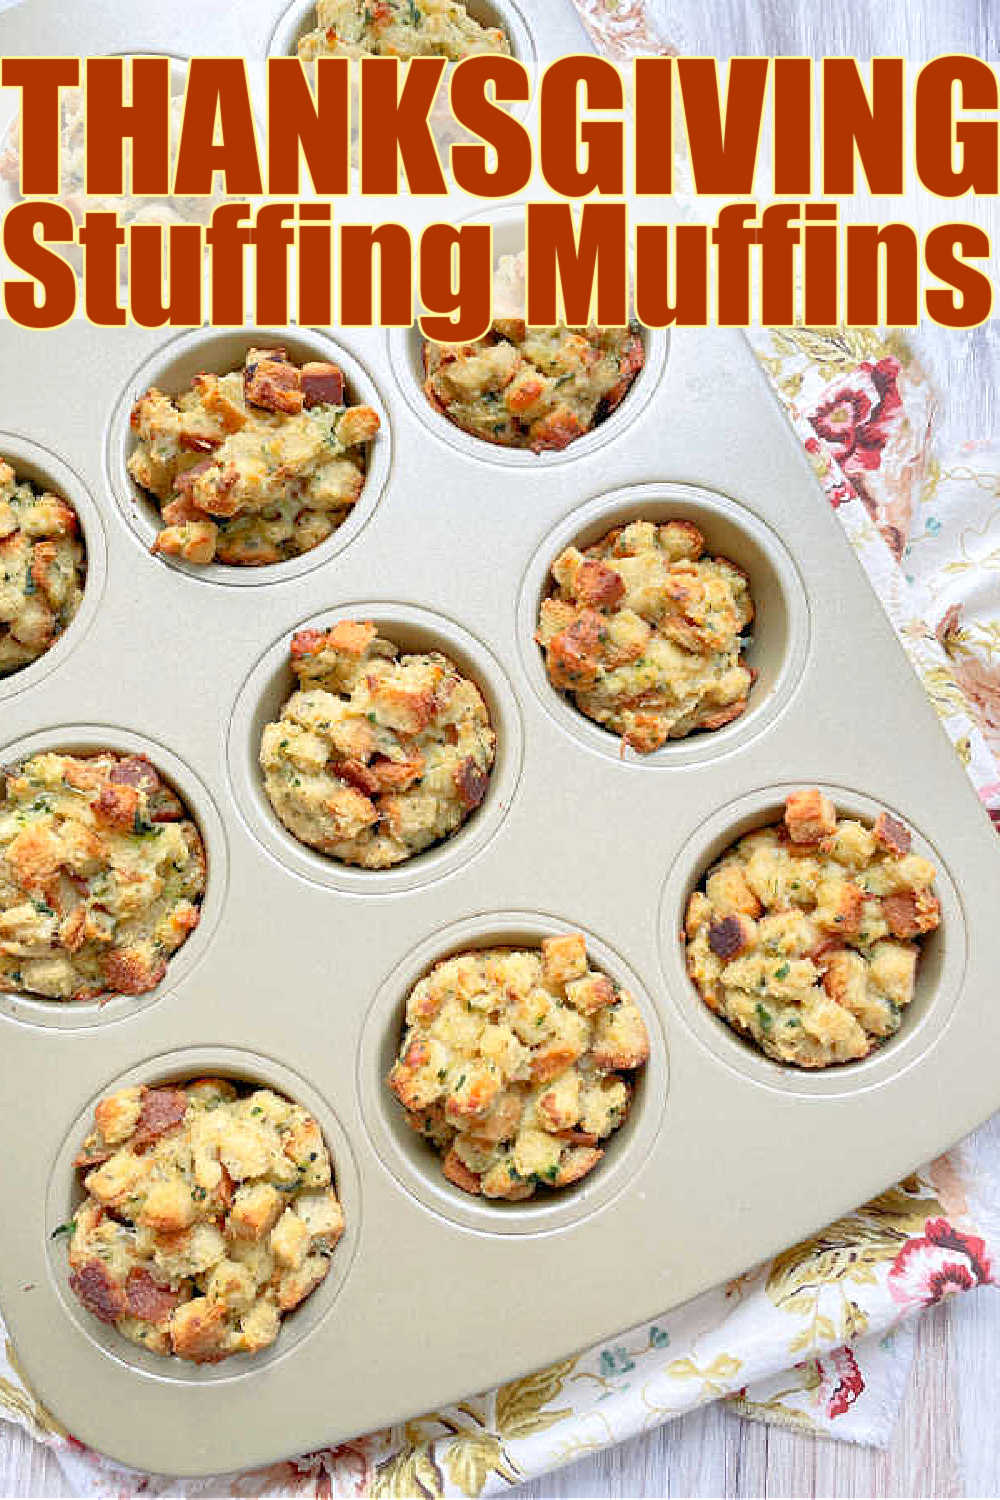 Stuffing Muffins | Foodtastic Mom #thanksgivingstuffing #stuffingmuffins #stuffingrecipes